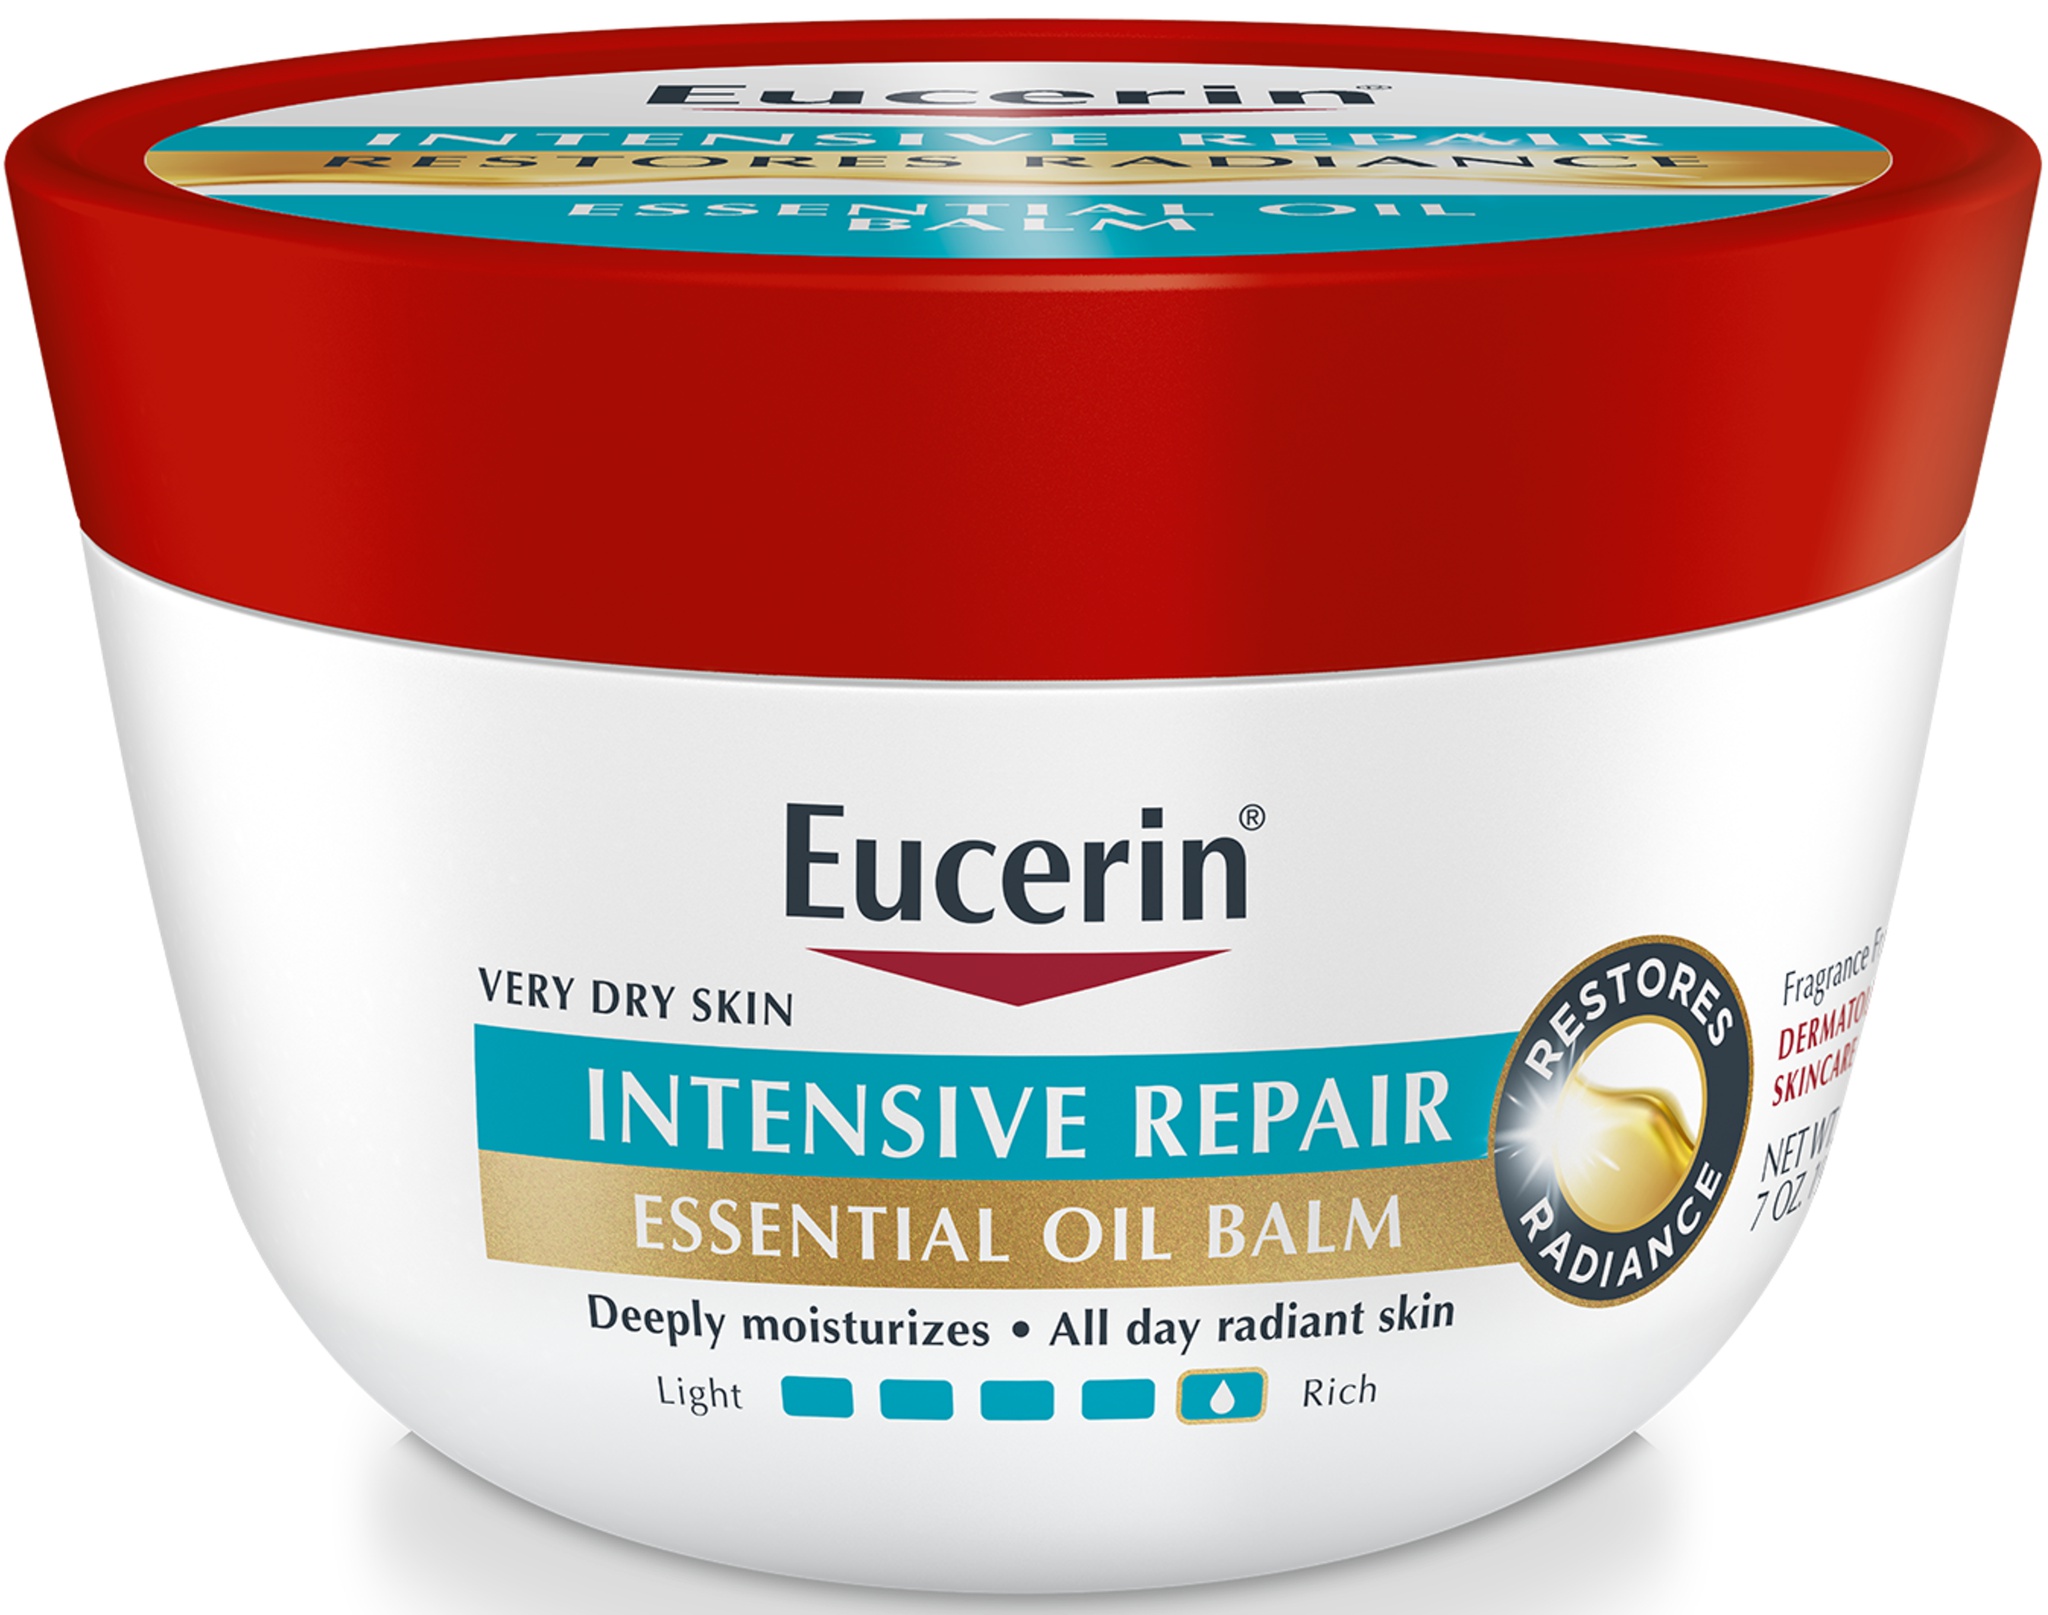 Eucerin Intensive Repair Essential Oil Balm